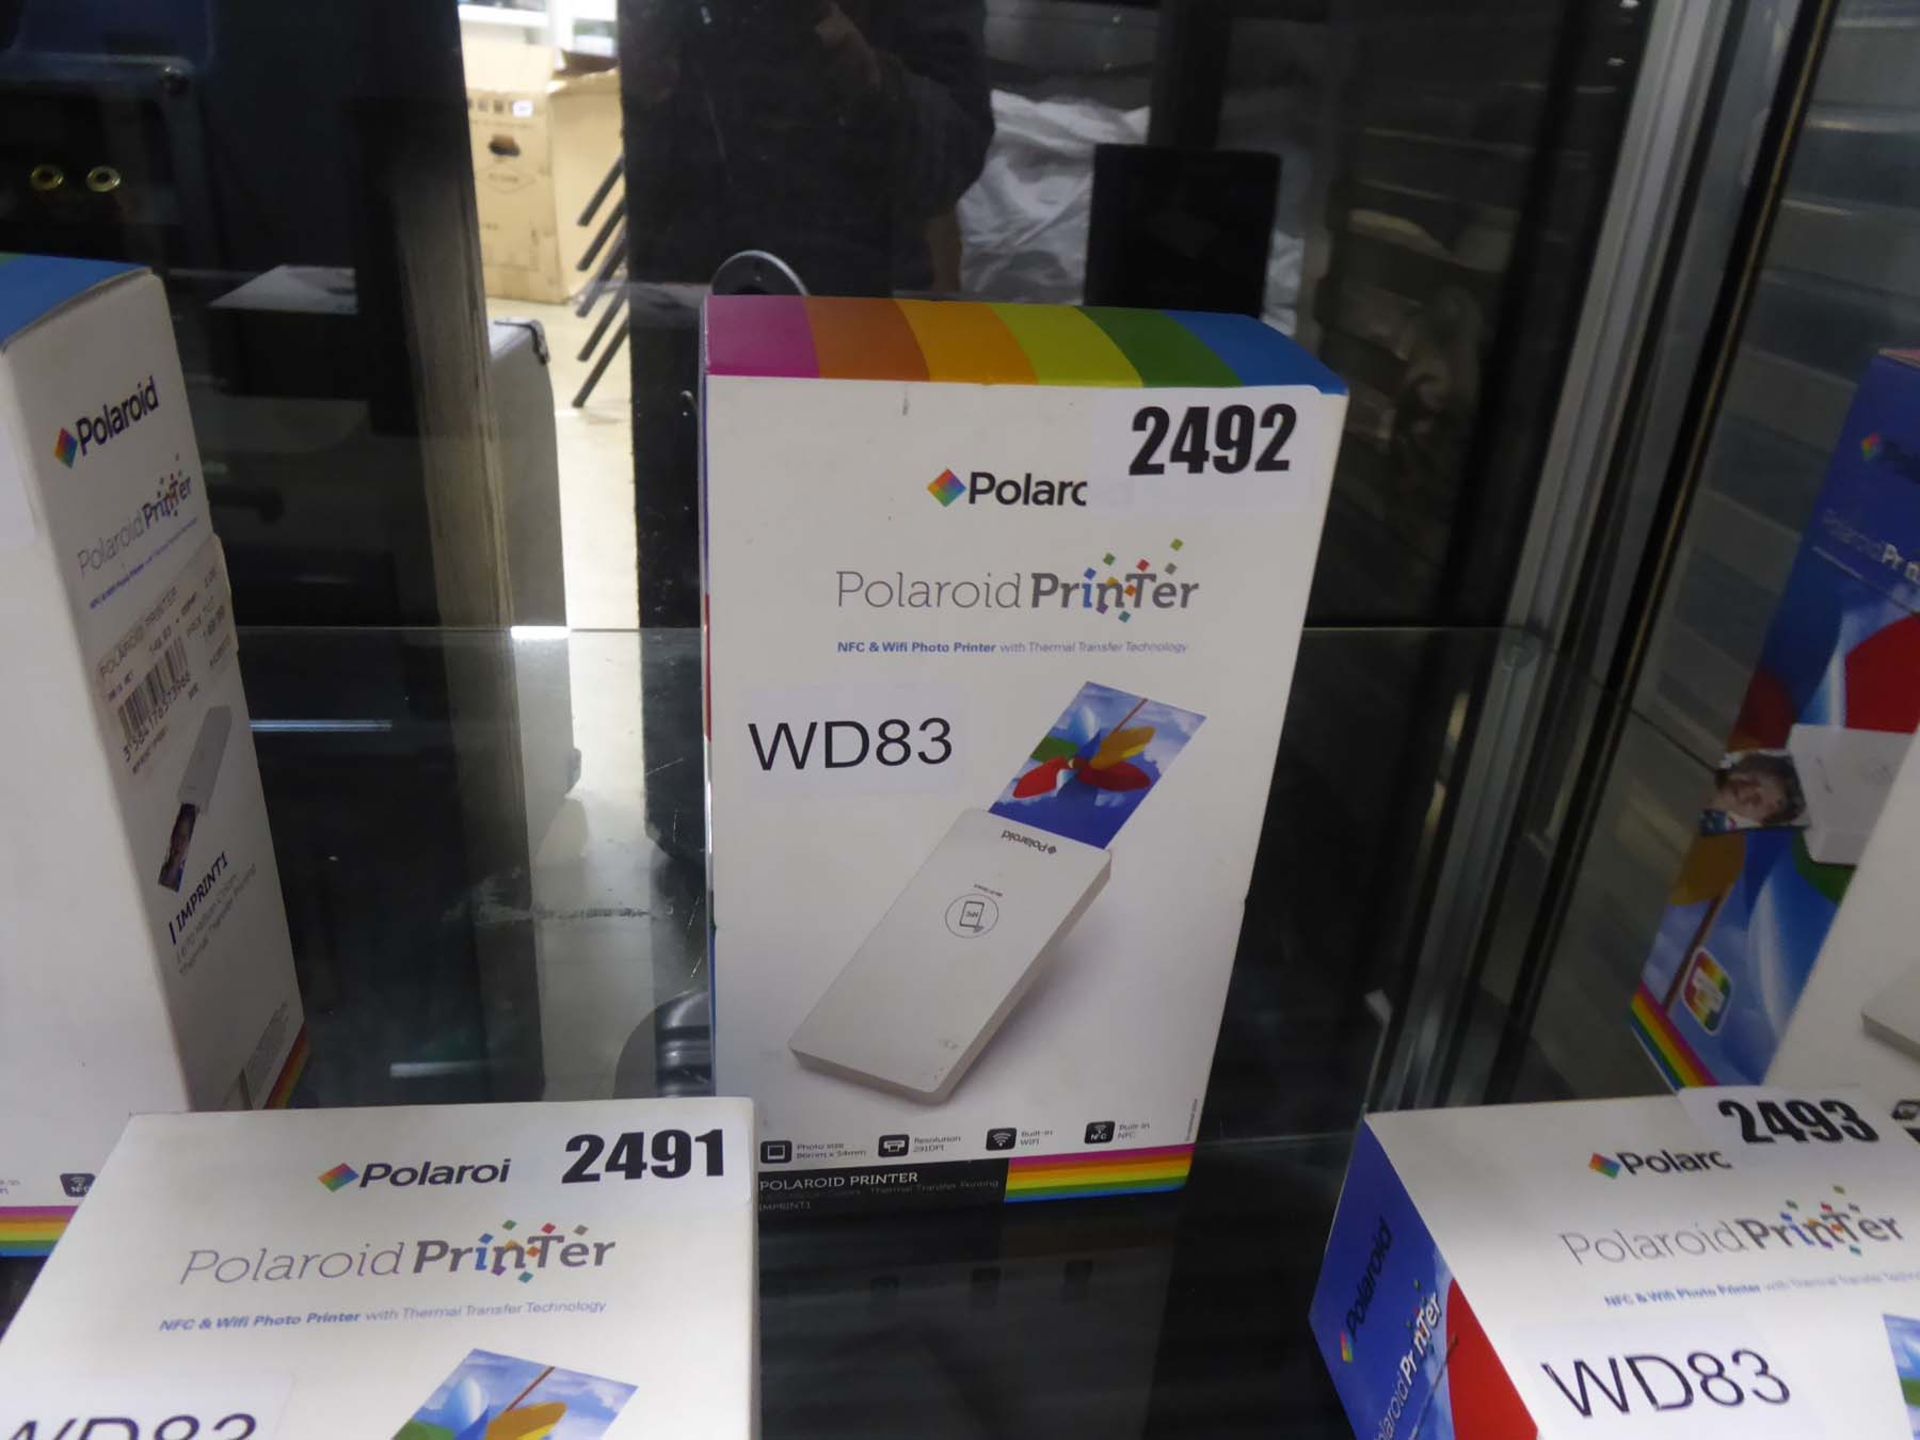 Polaroid NFC and wifi photo printer in box